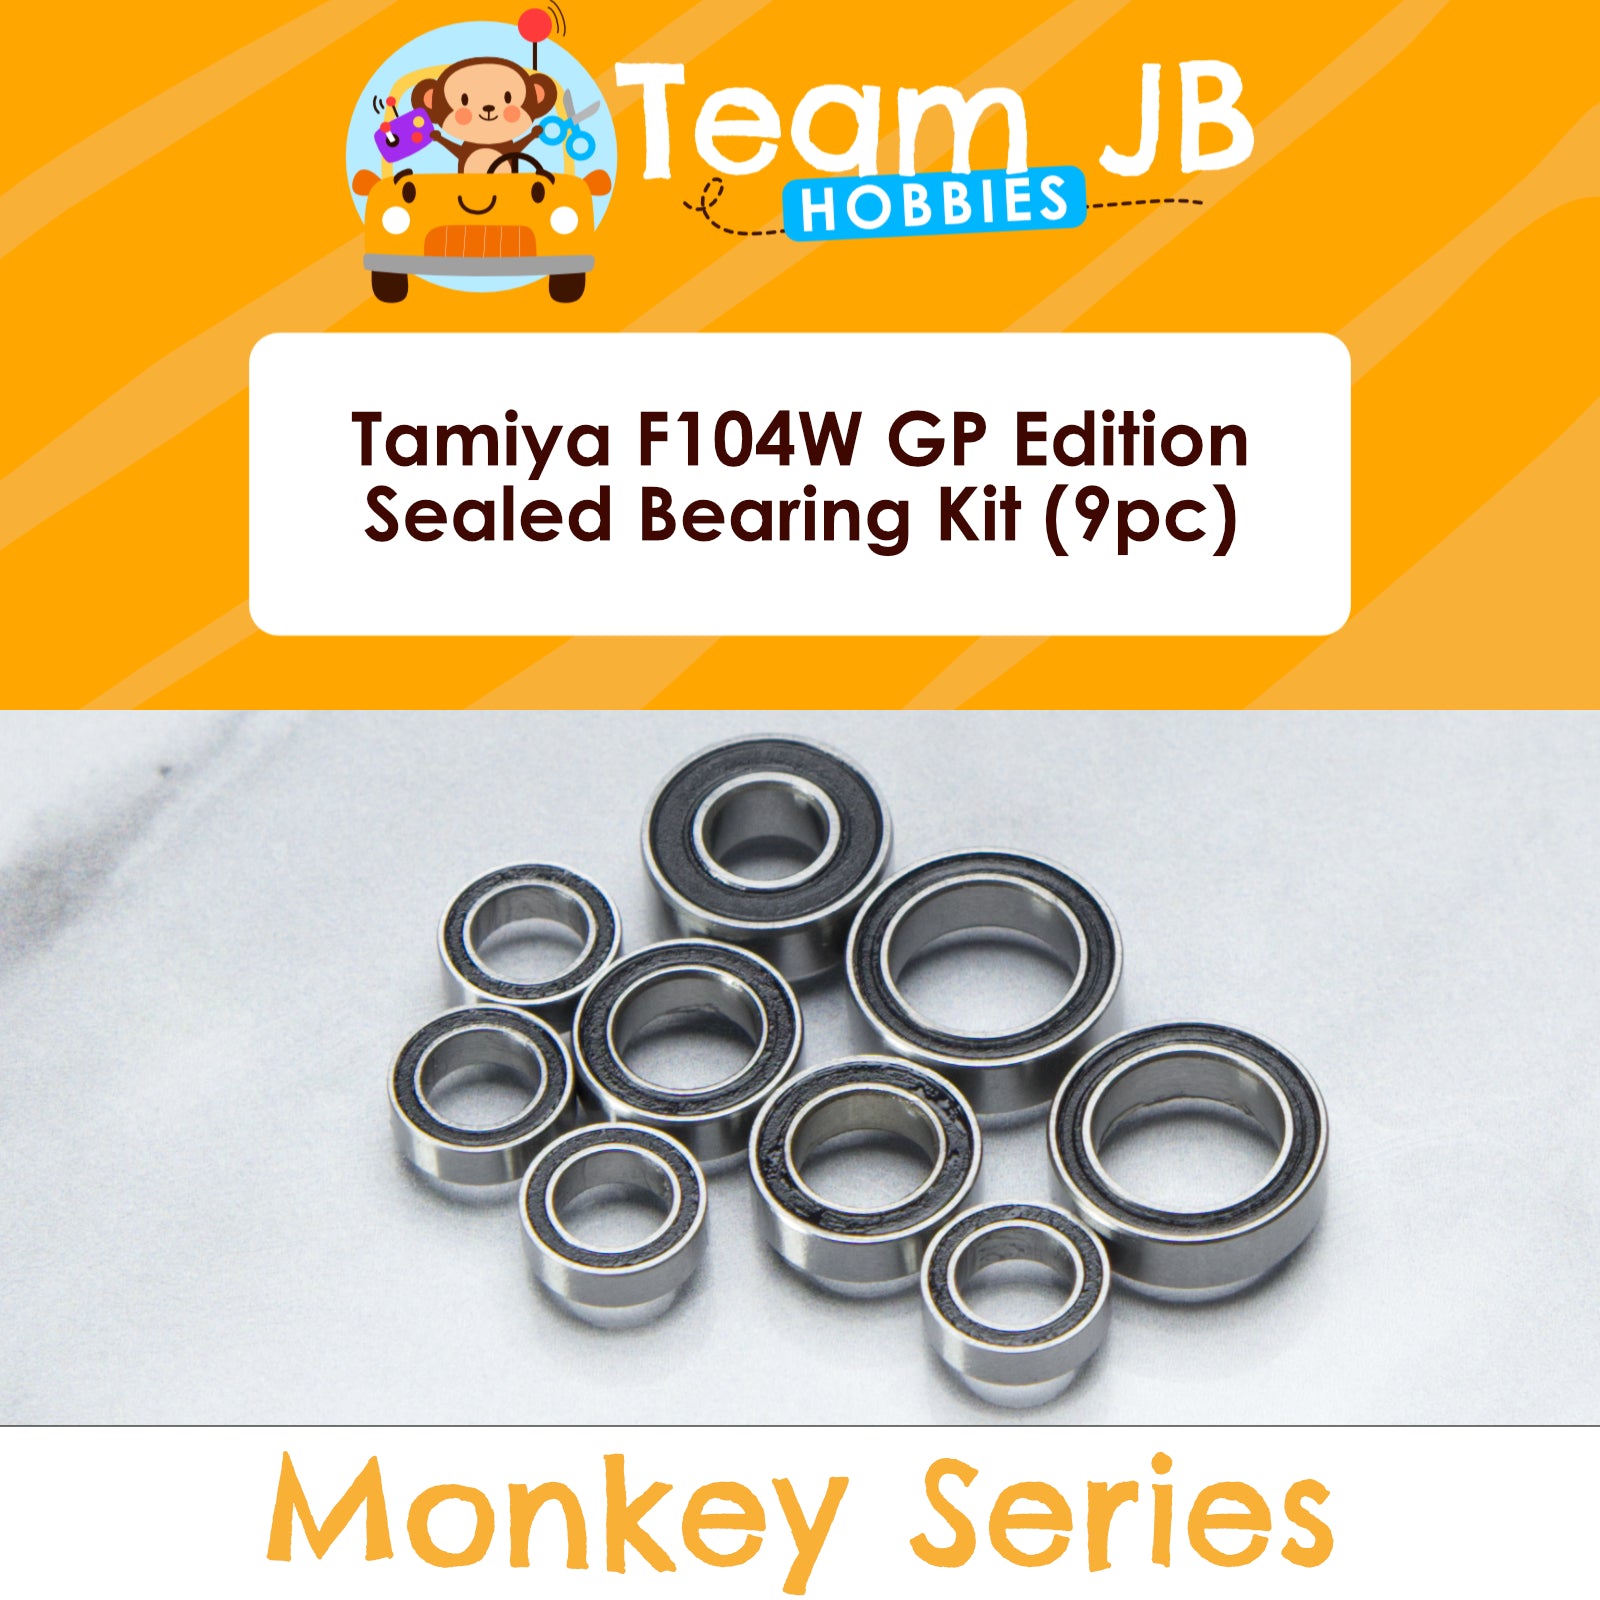 Tamiya F104W GP Edition - Sealed Bearing Kit